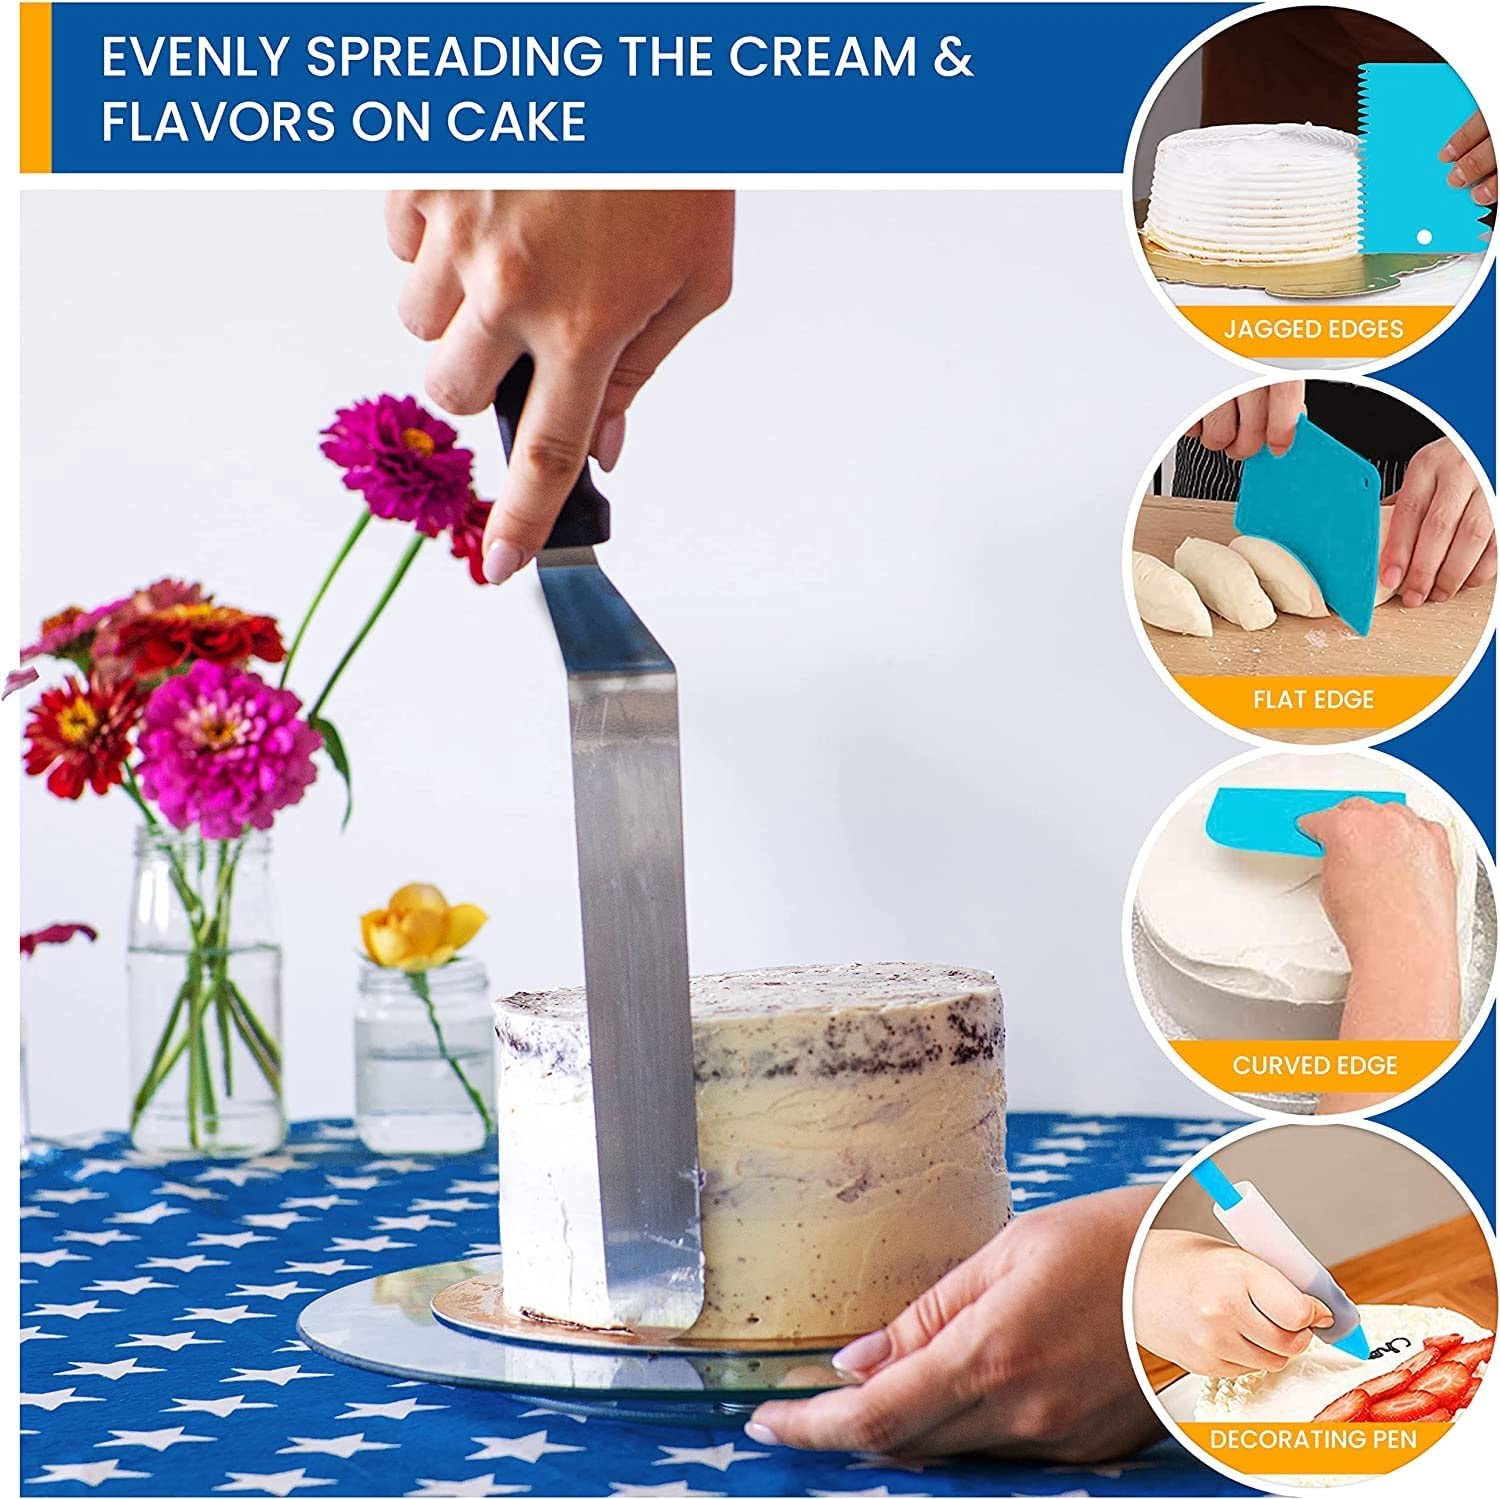 Free shipping Birthday Cake Cream Icing Coating Machine Cake Decorating  Tools Bread Cake Cream Butter Spreading